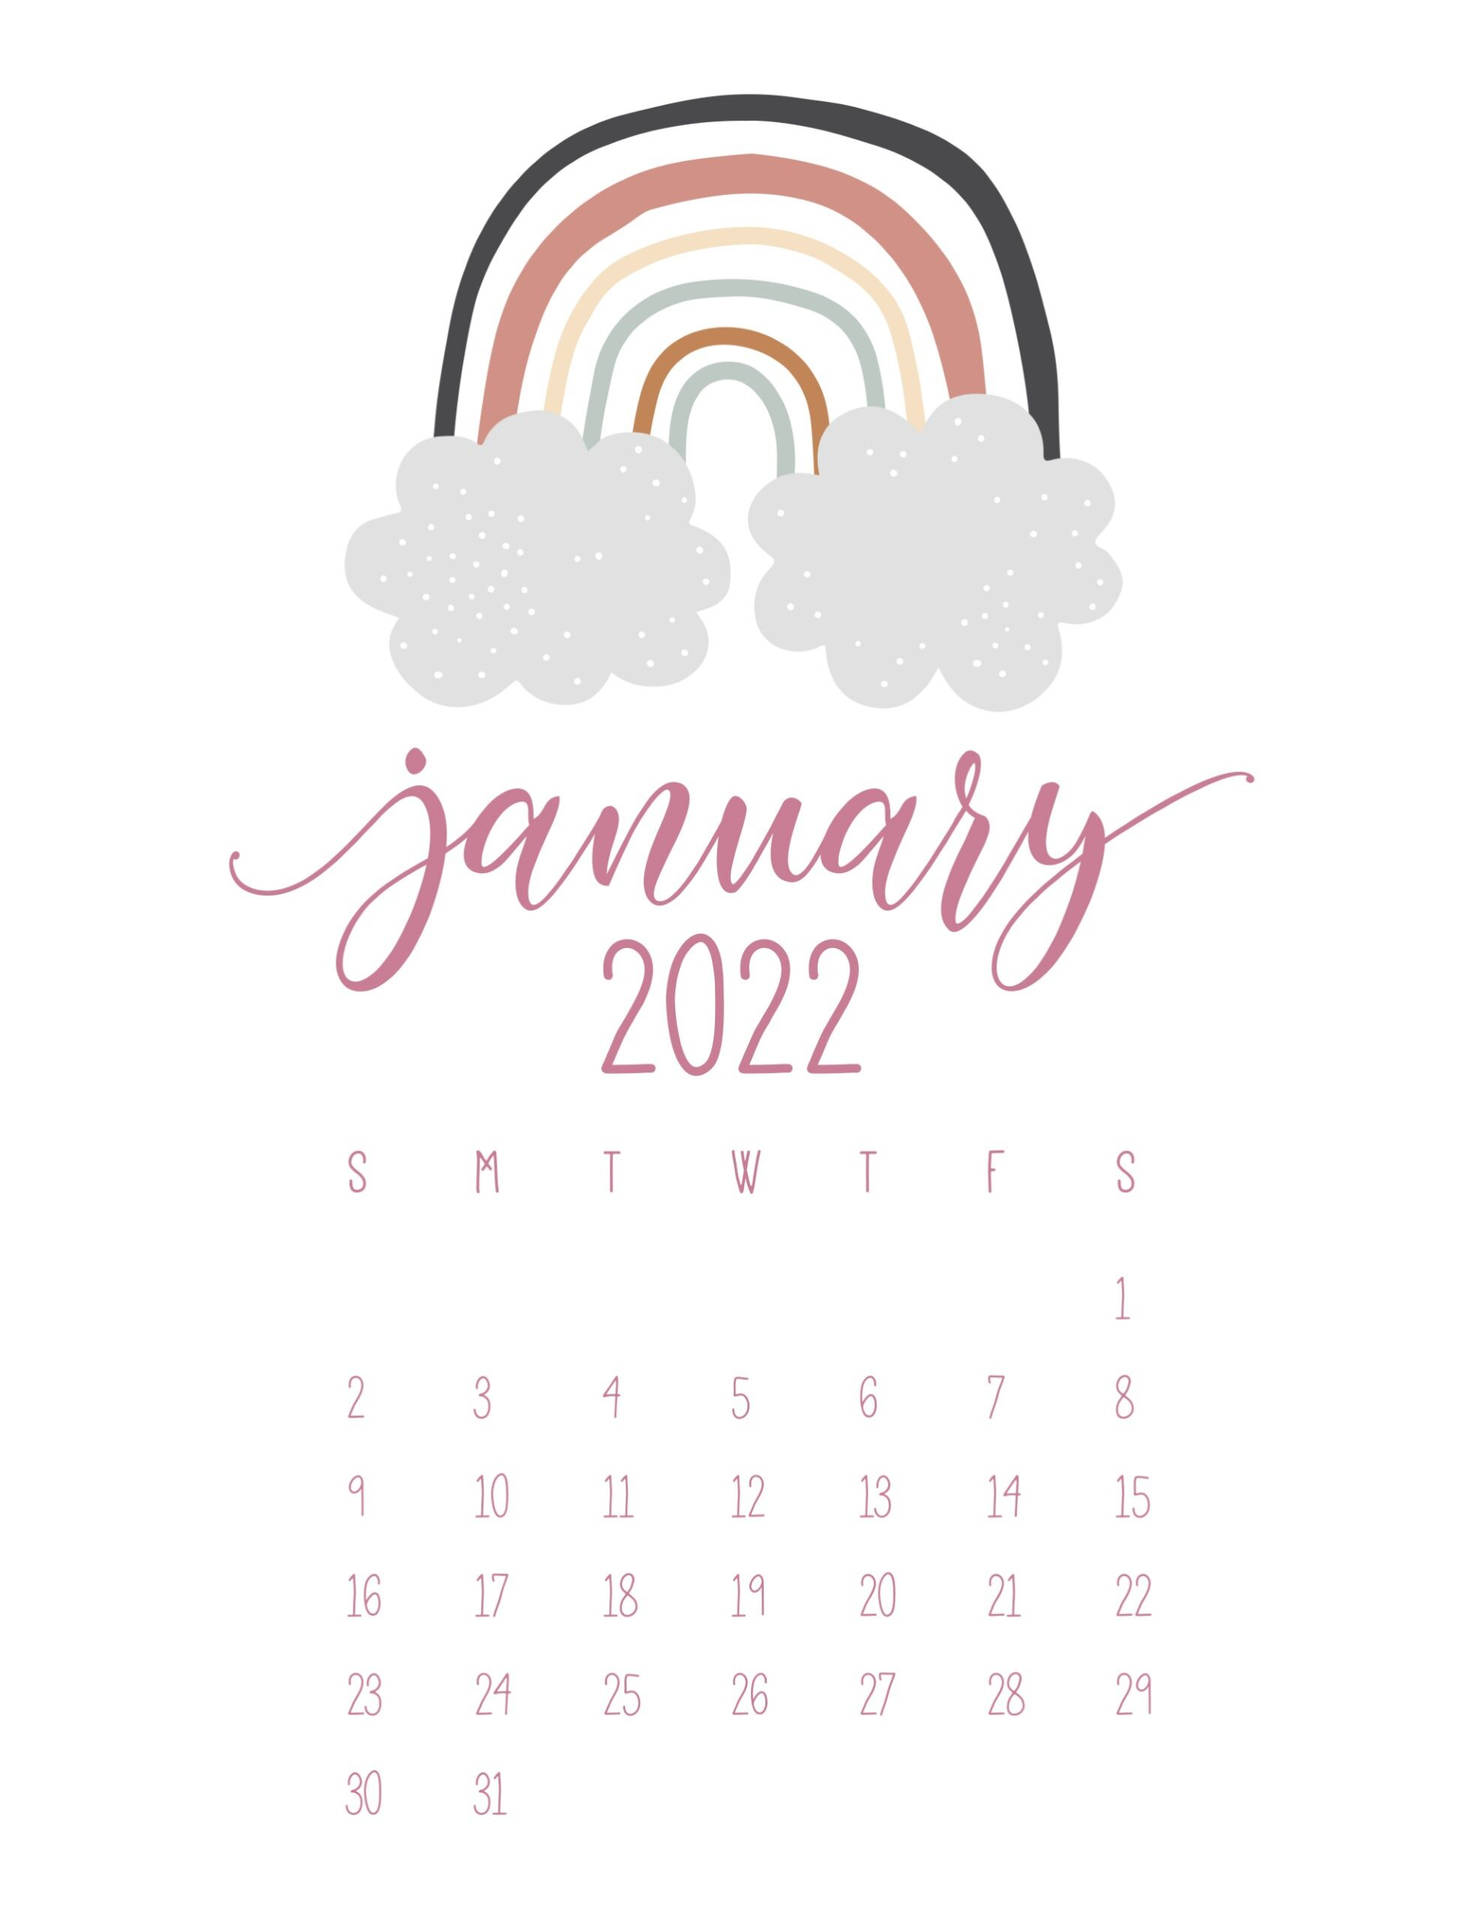 January 2022 Rainbow Calendar Wallpaper